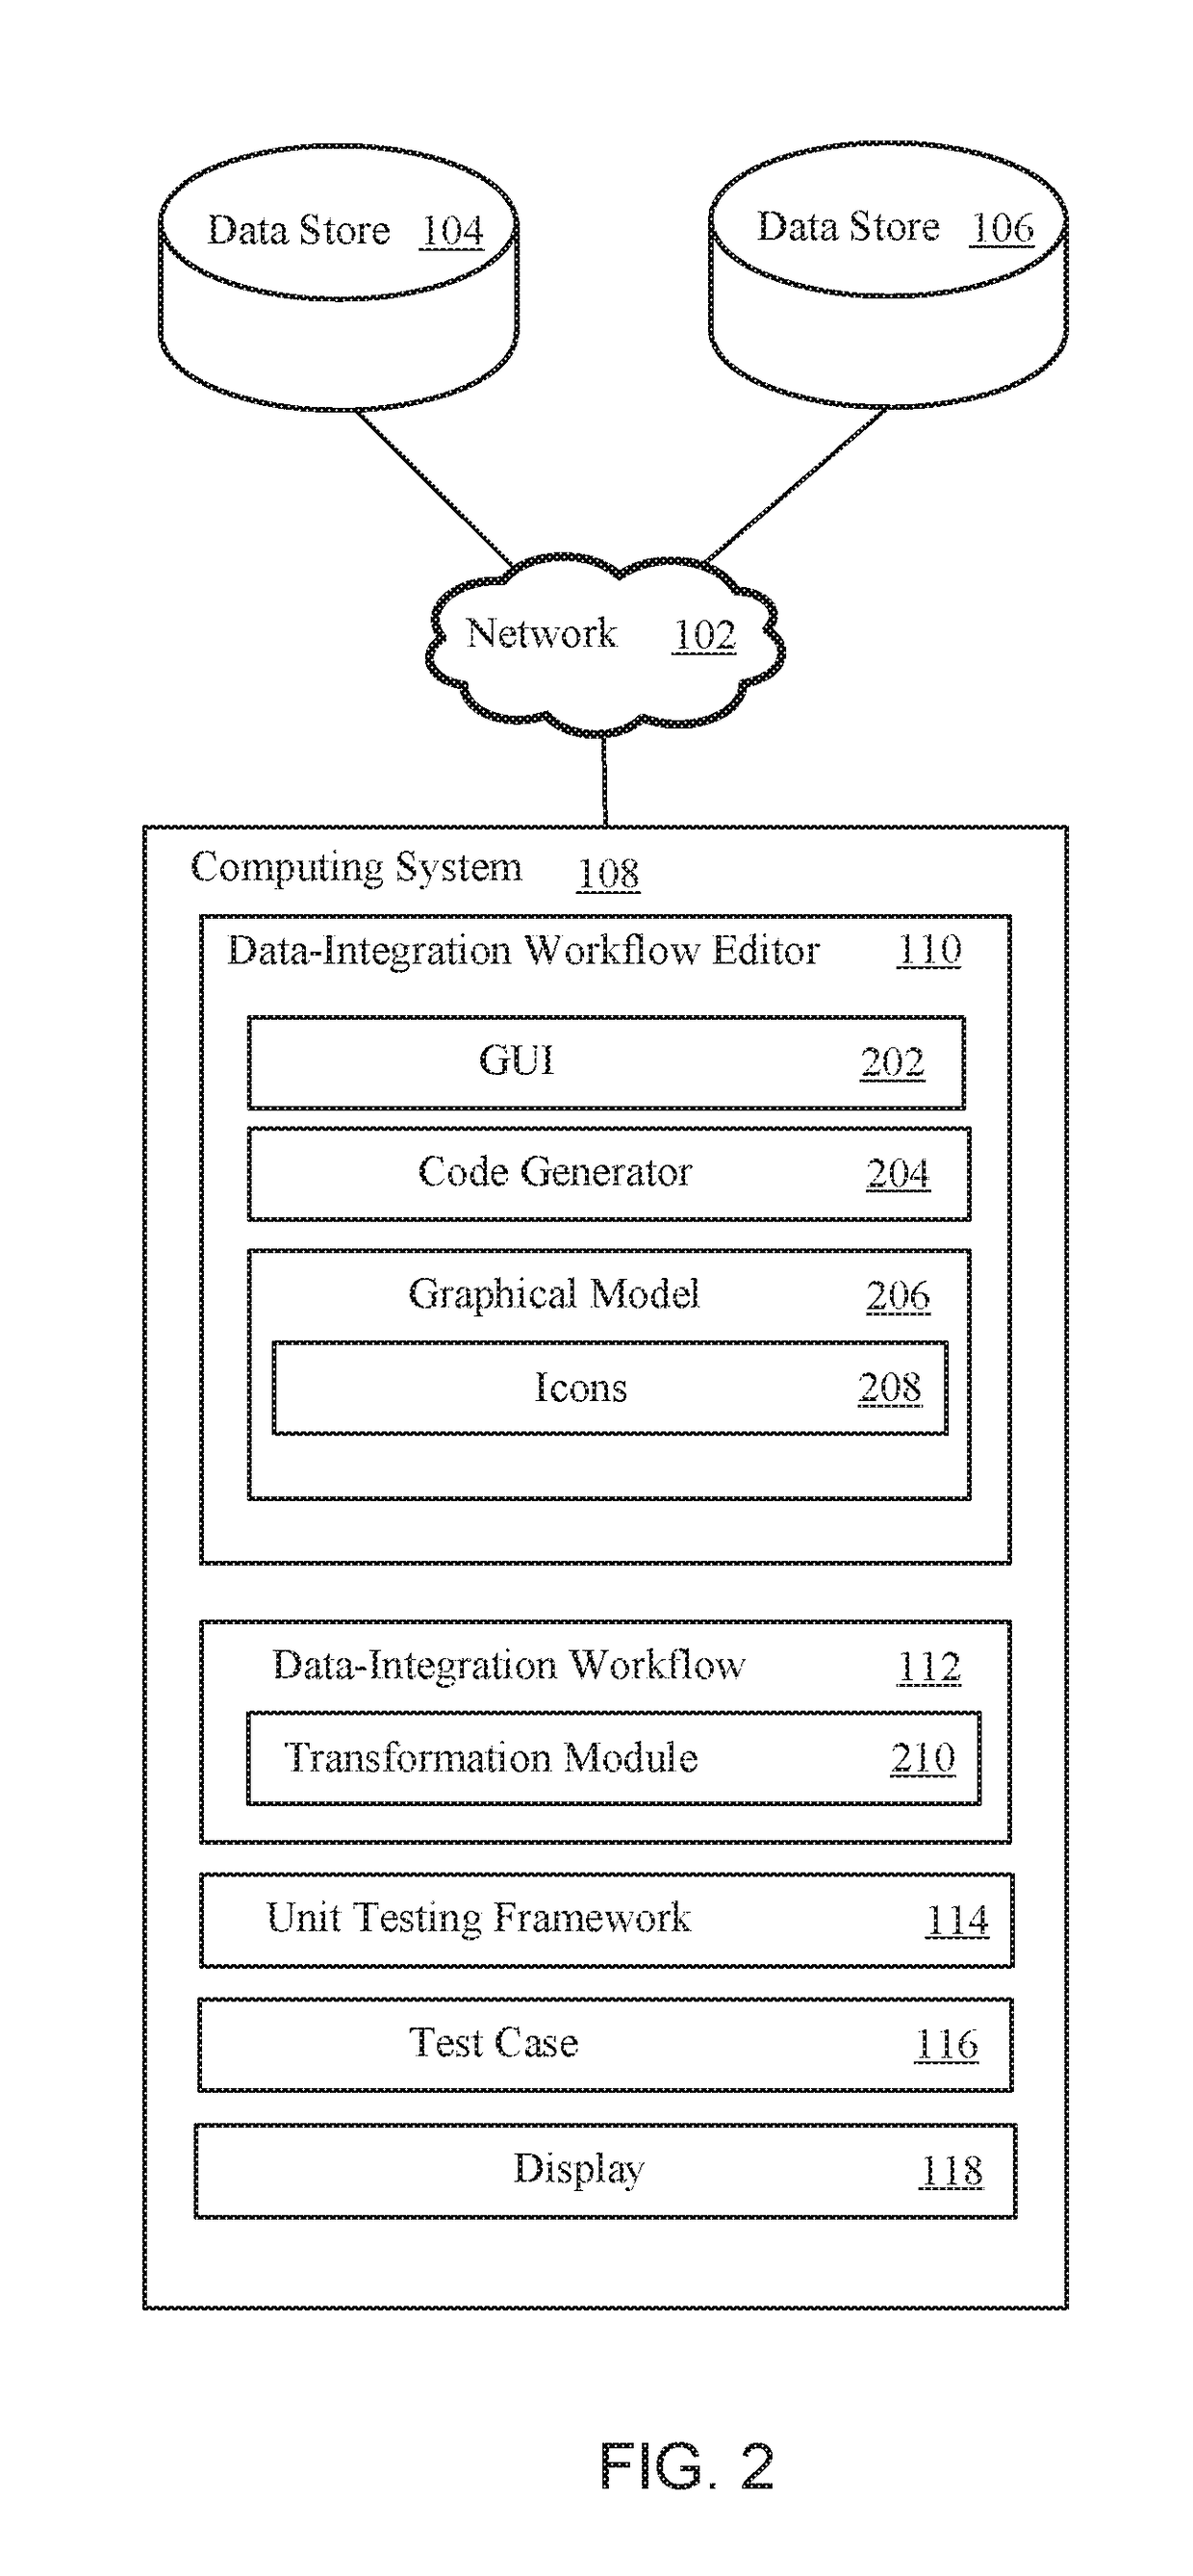 Test case generator built into data-integration workflow editor